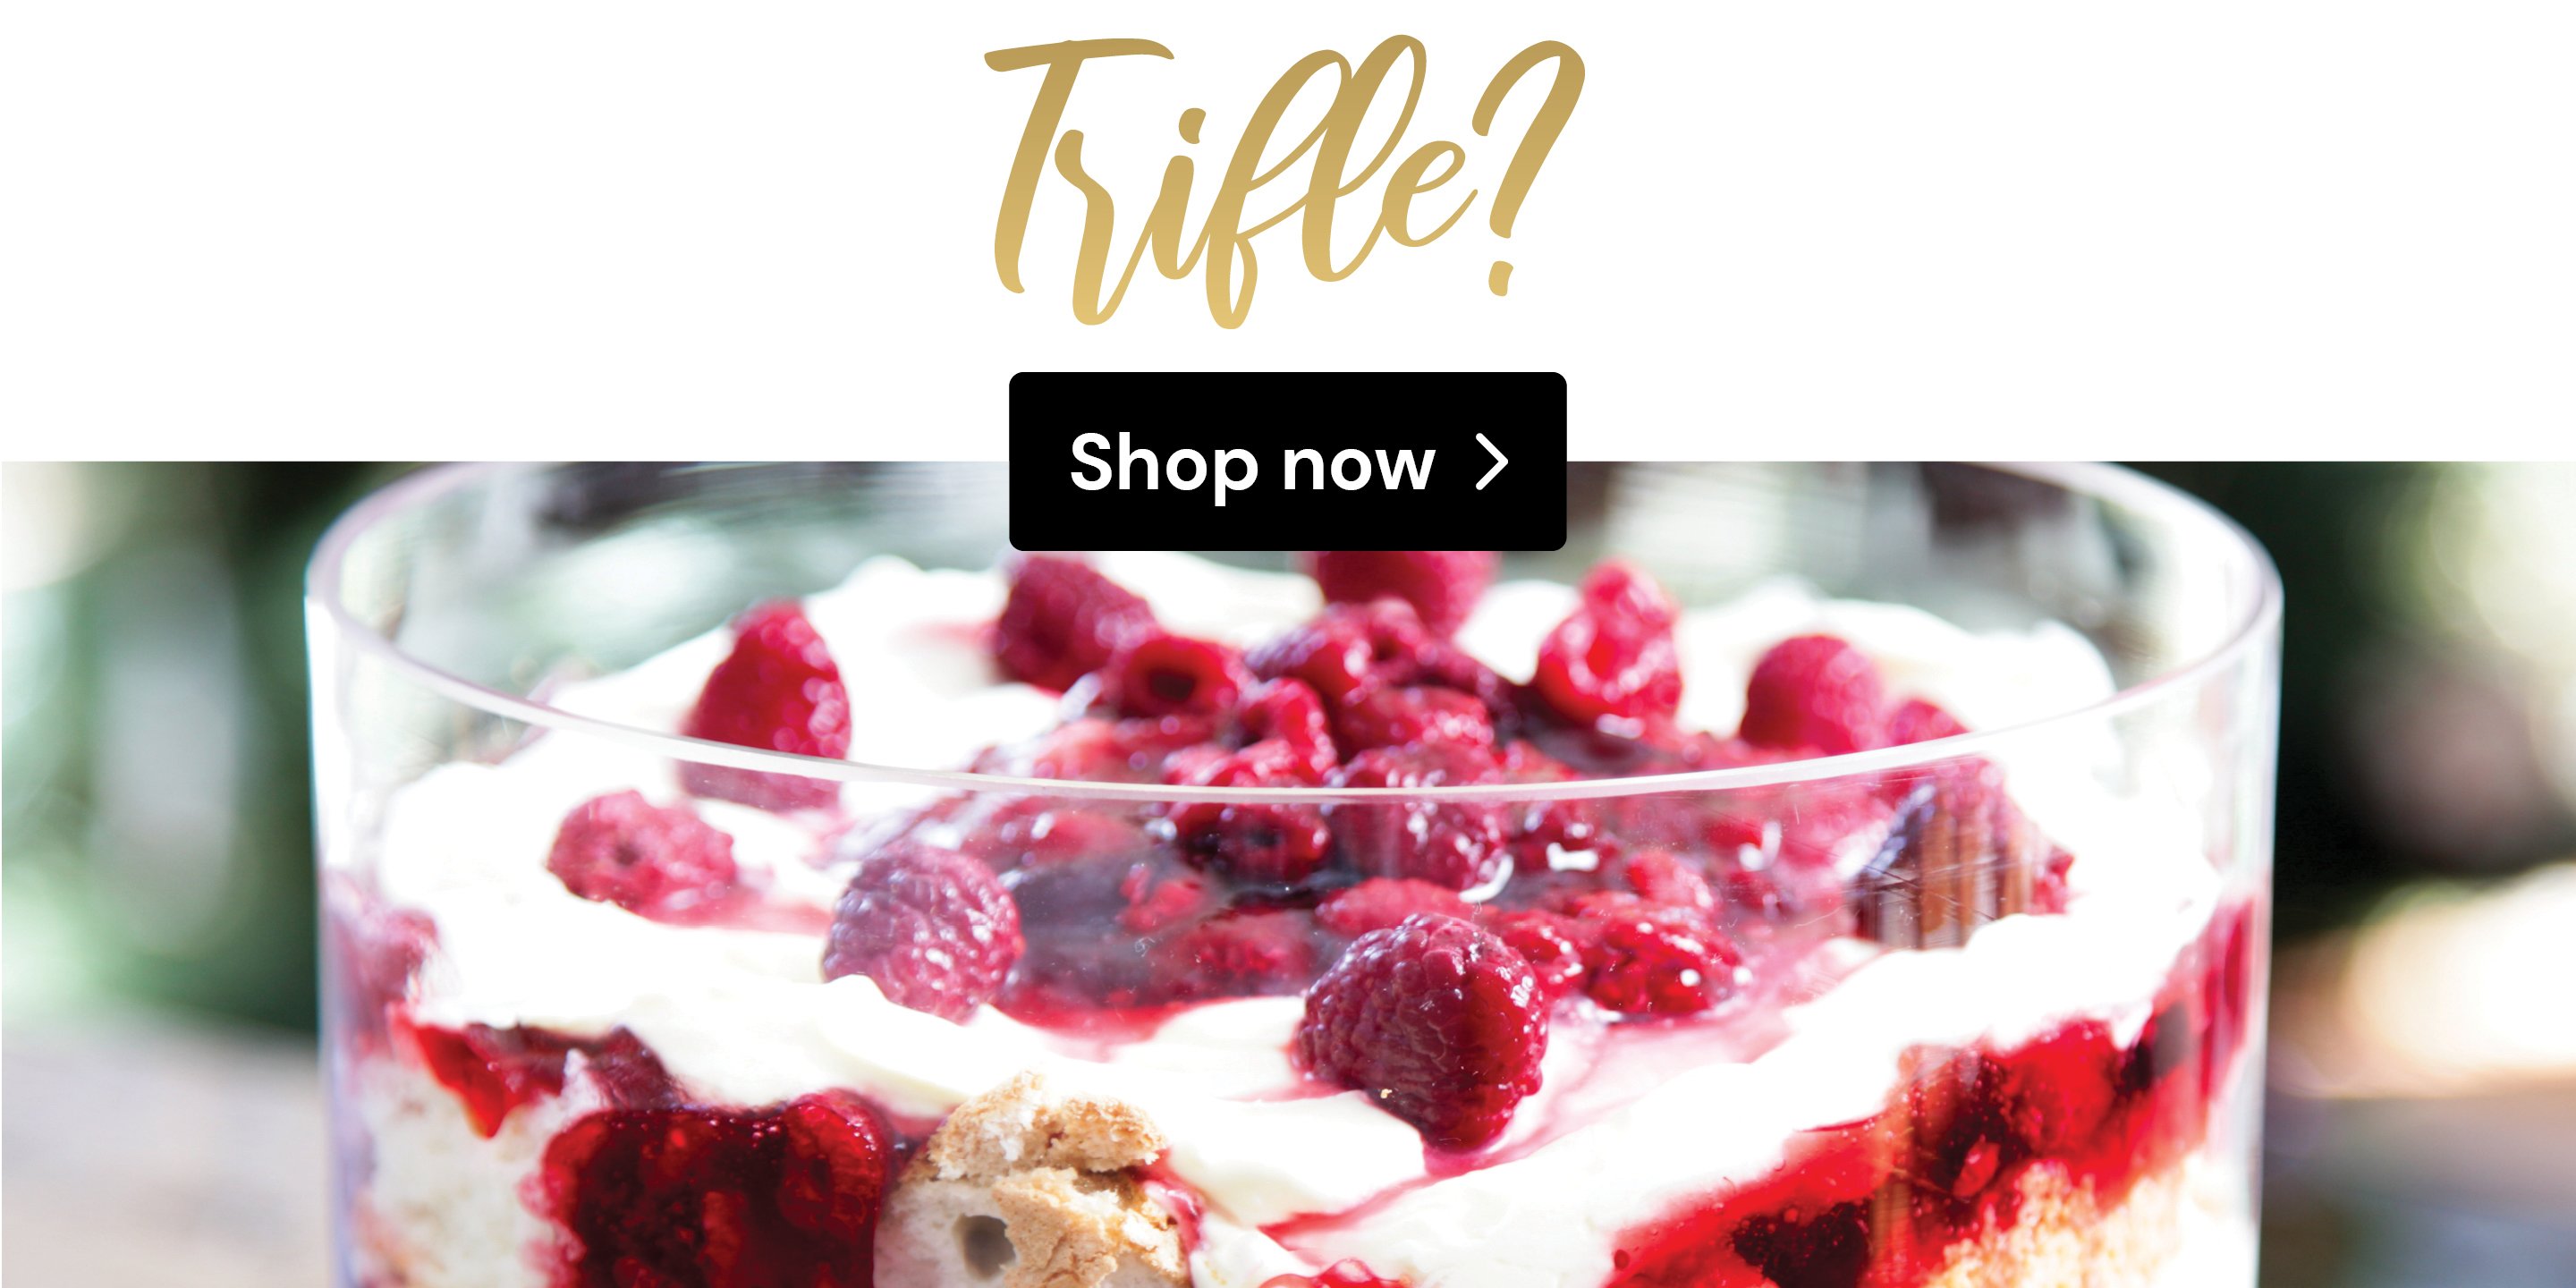 Trifle? Shop now